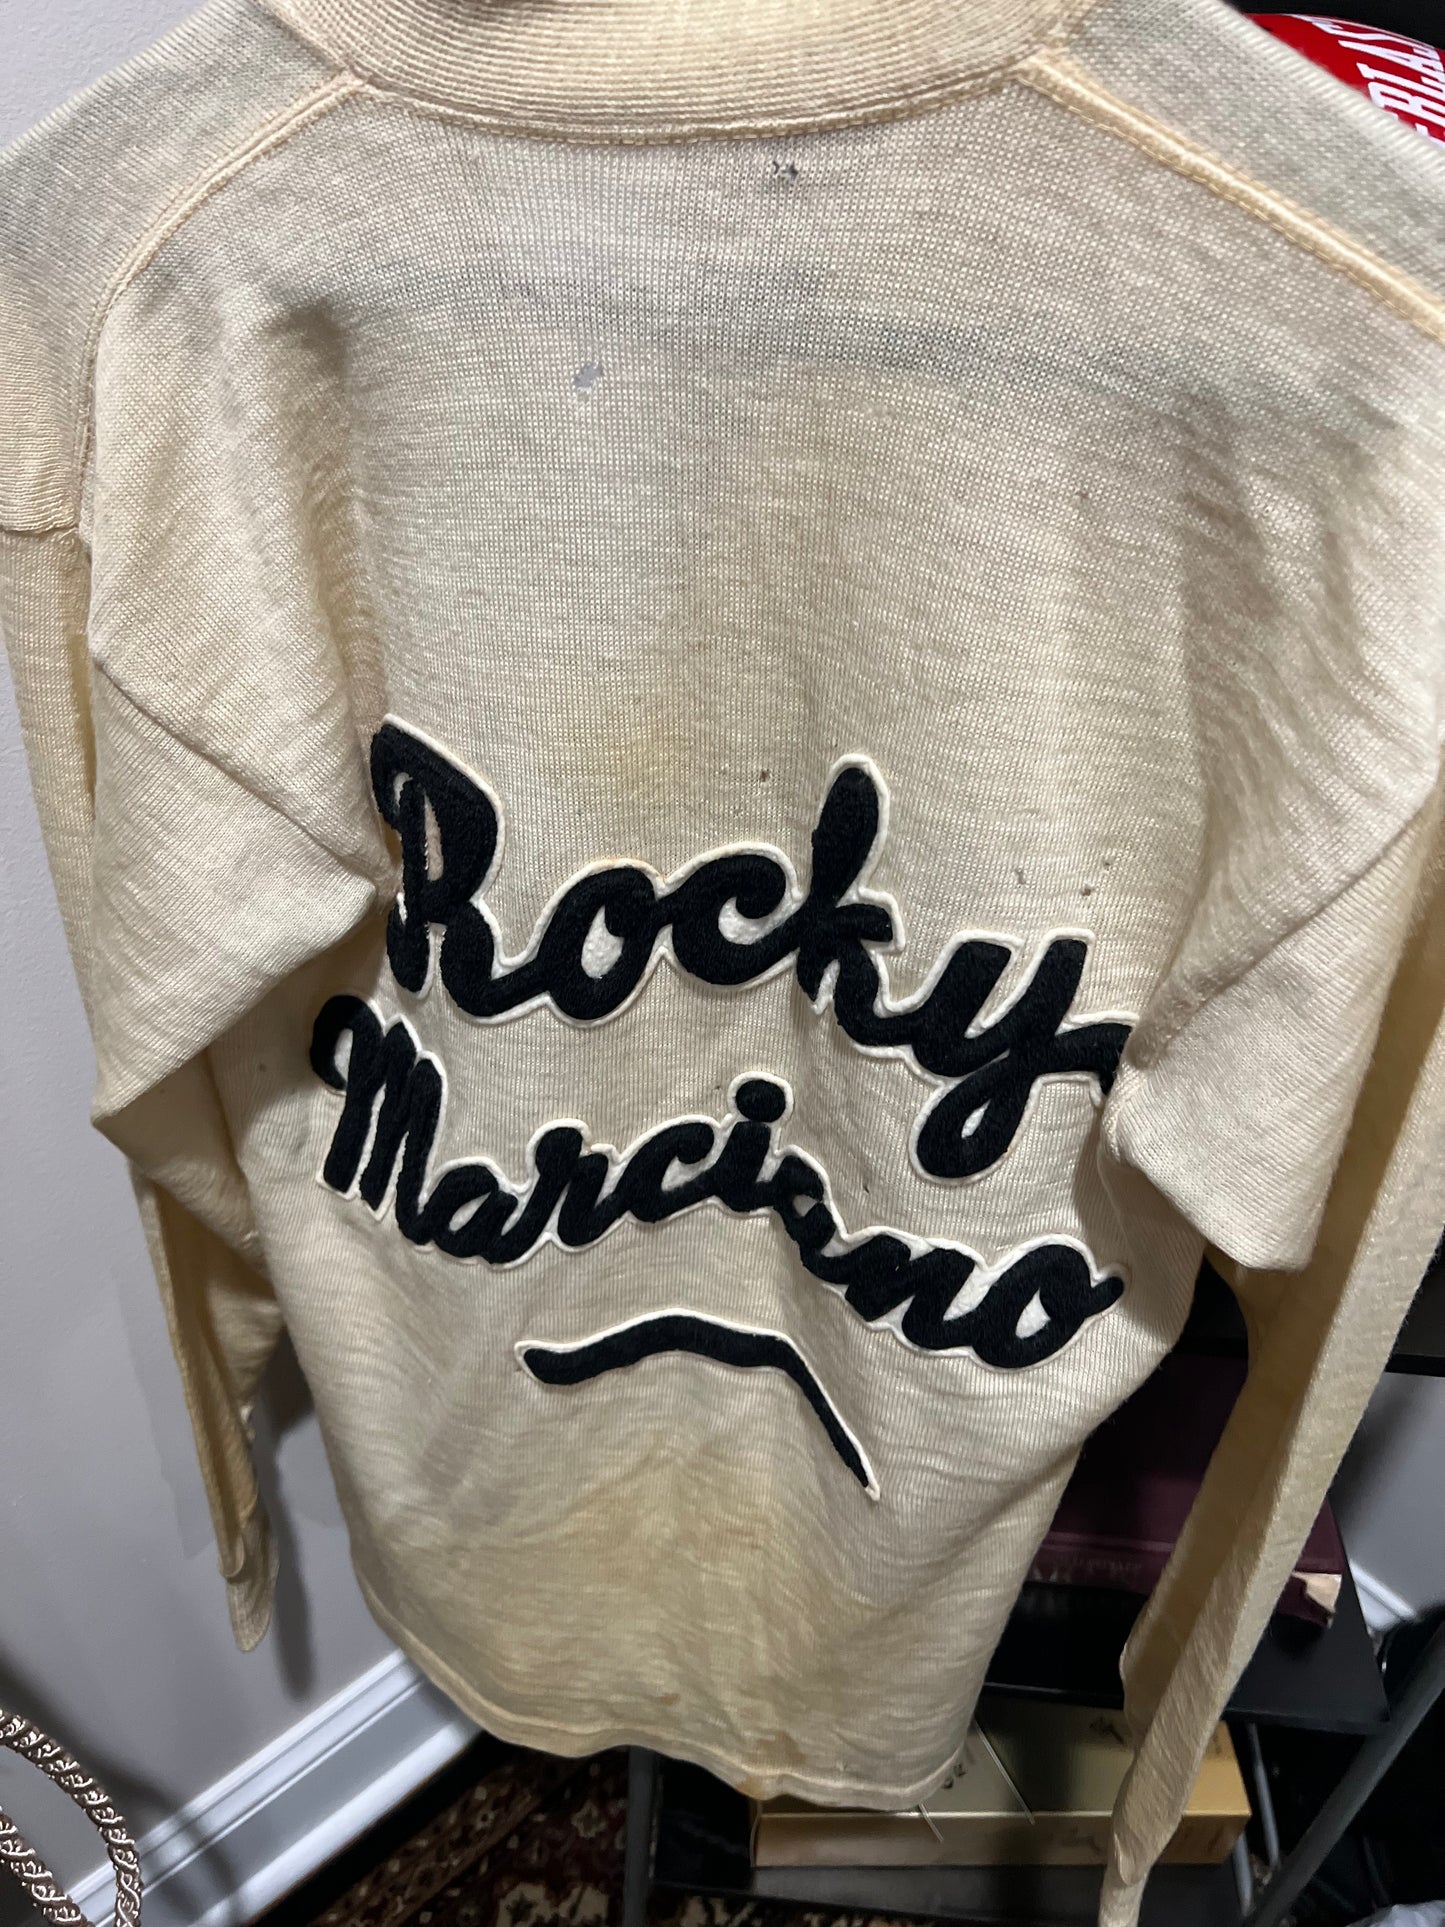 Rocky Marciano Cornermans sweater from 1950s Al Mandy photo match Rare!!!